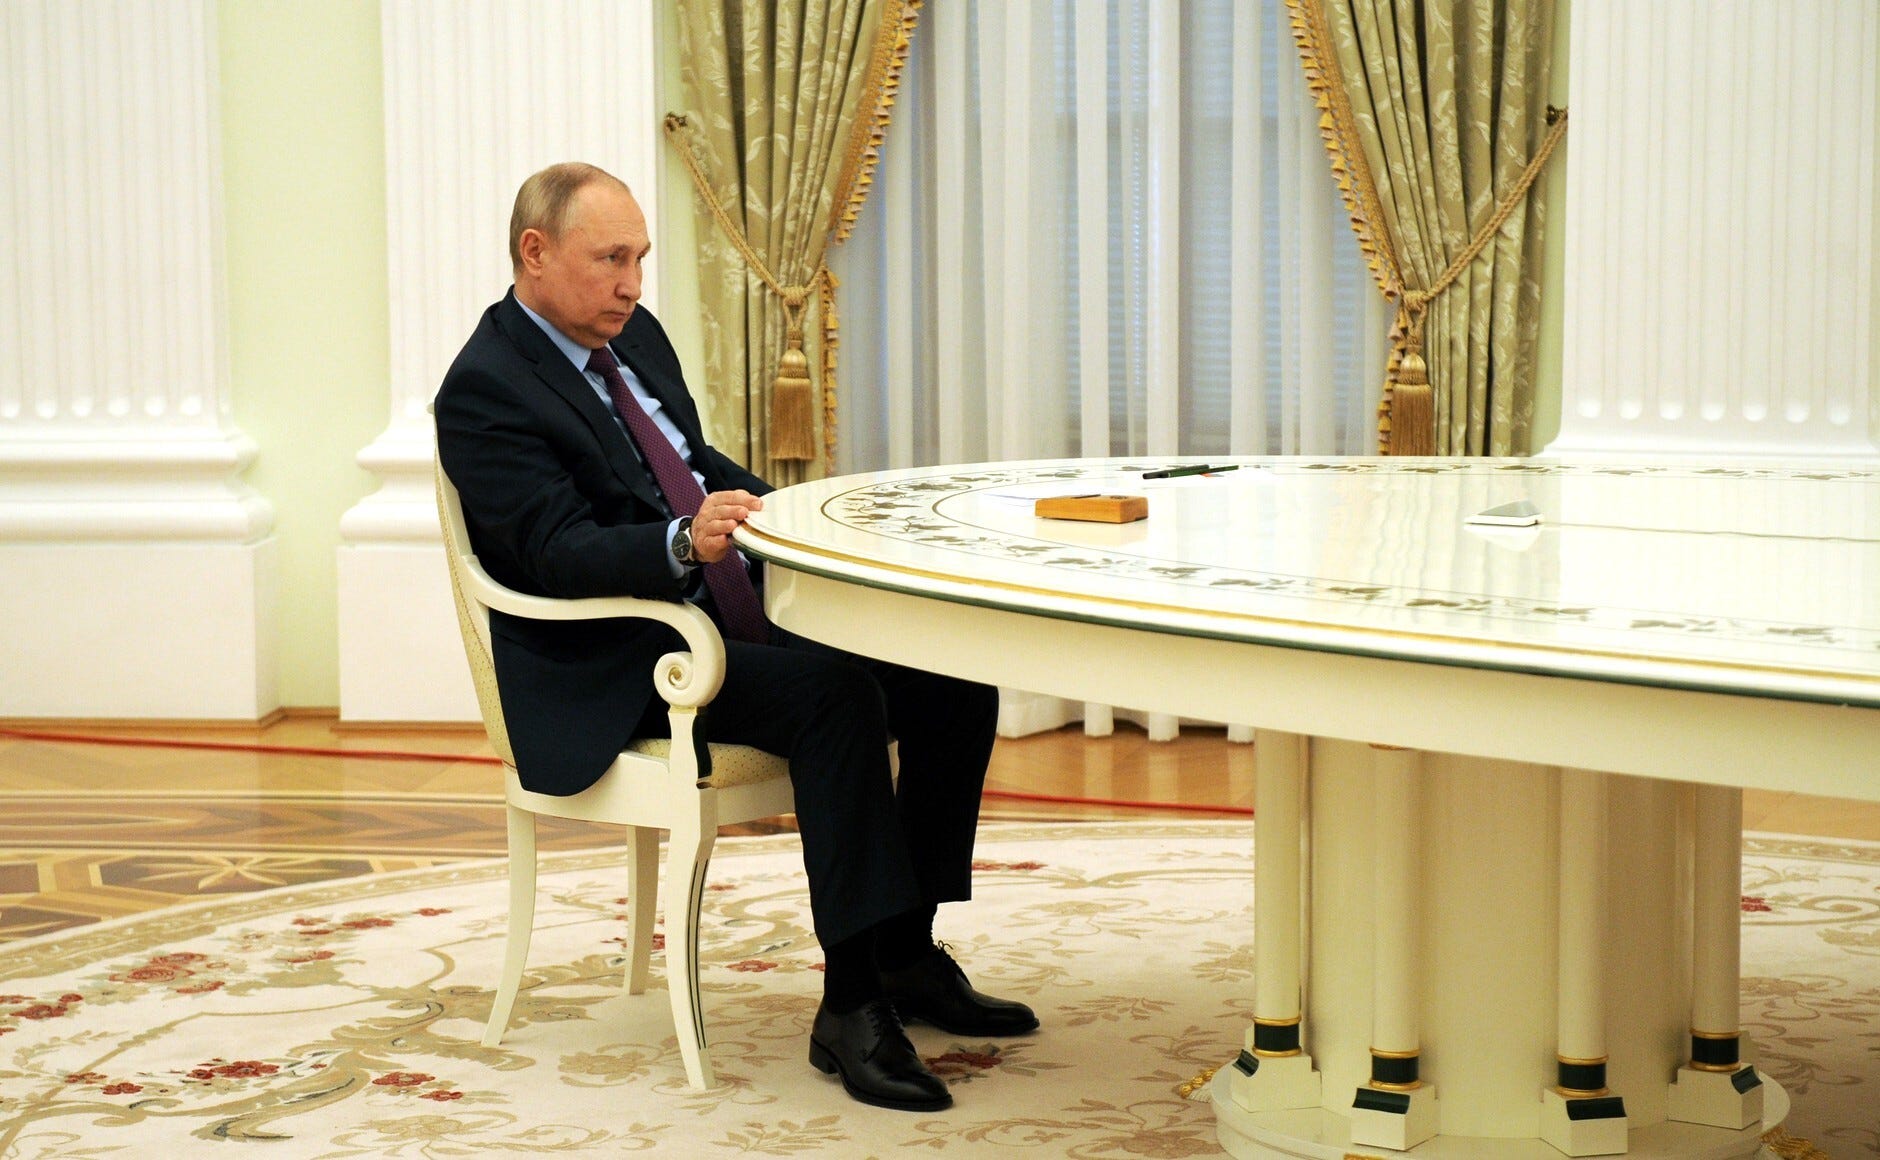 Putin, paranoia and chess